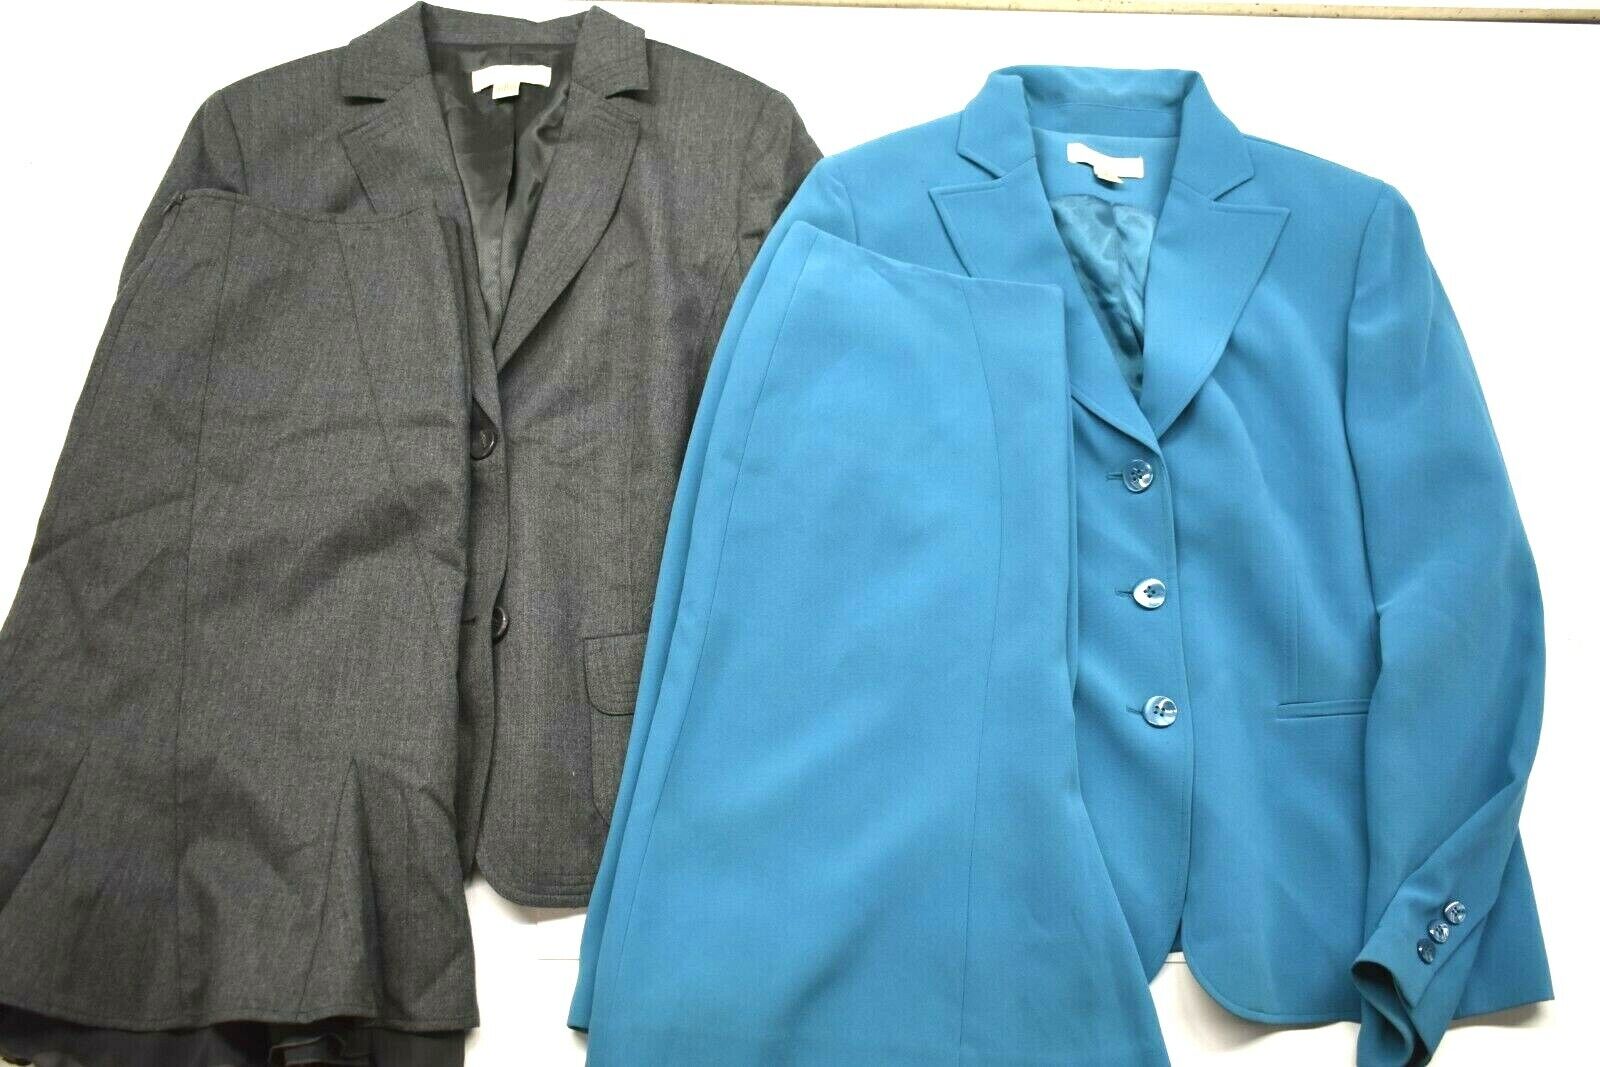 Lot of 2 Casual Corner Women's Size 12 Career Blazer & Skirt Sets Gray/Turquoise Casual Corner